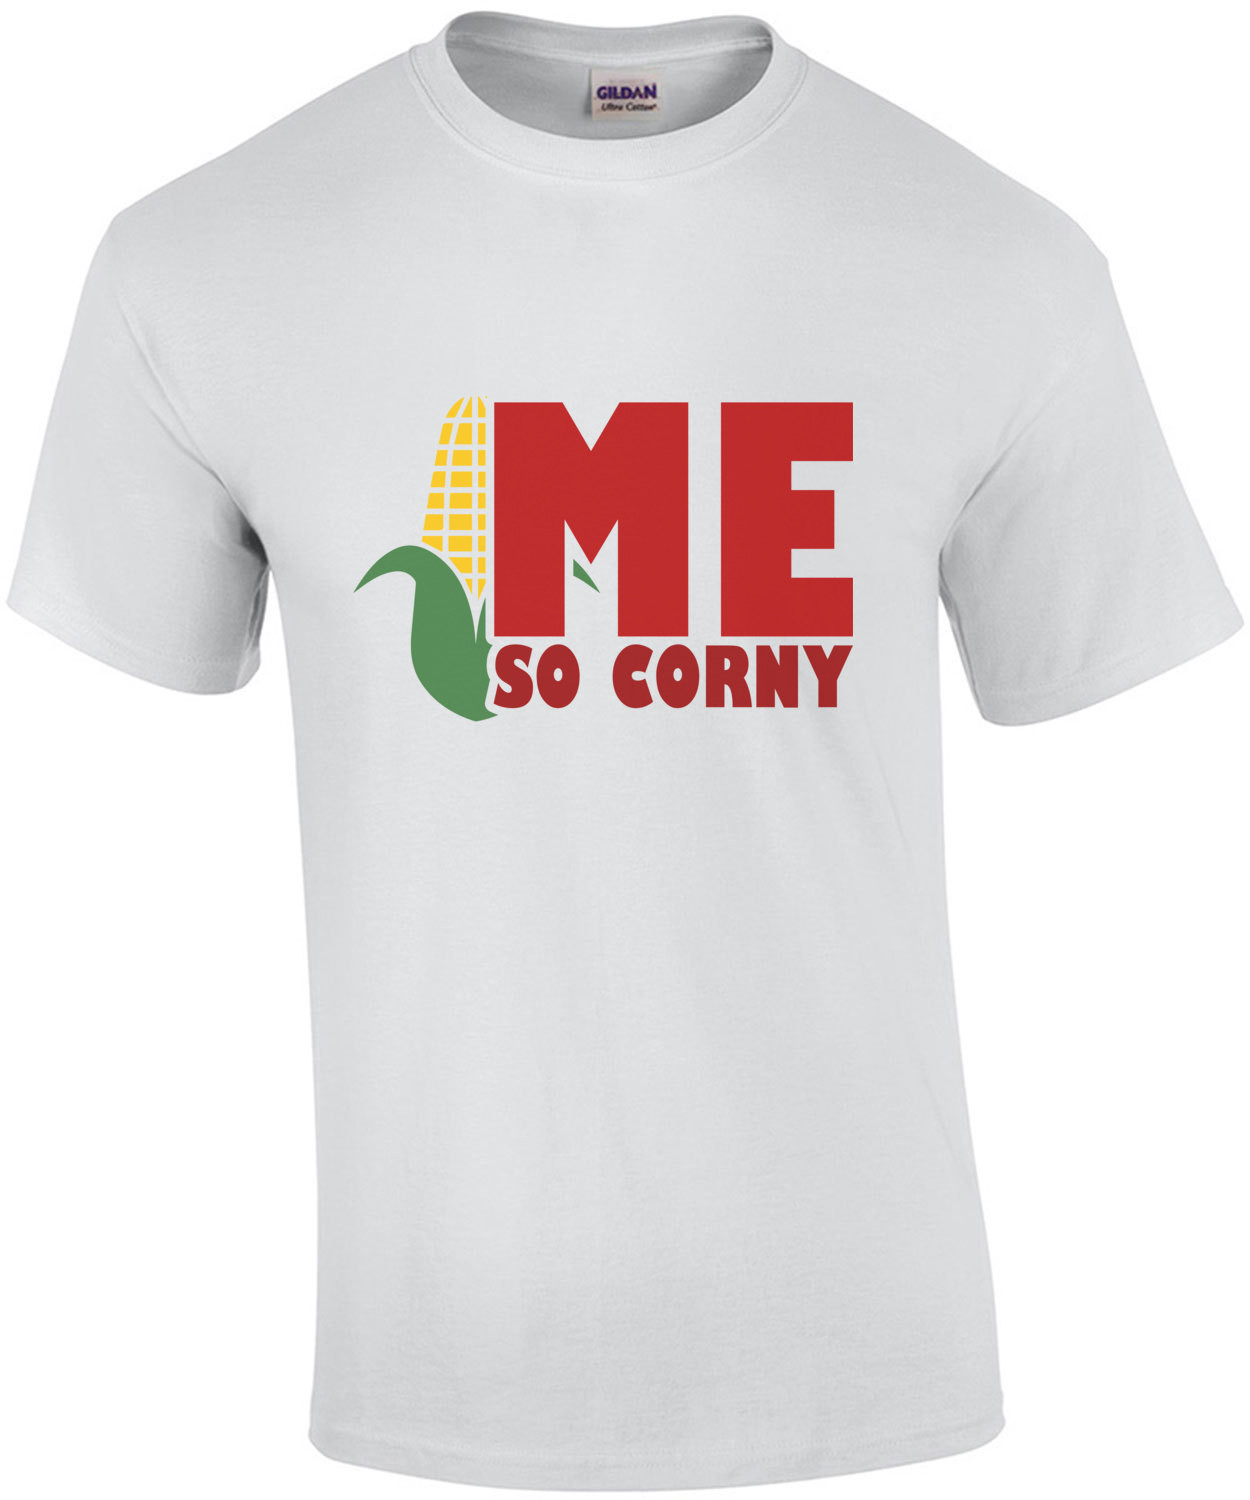 Me so corny - Nebraska T-Shirt